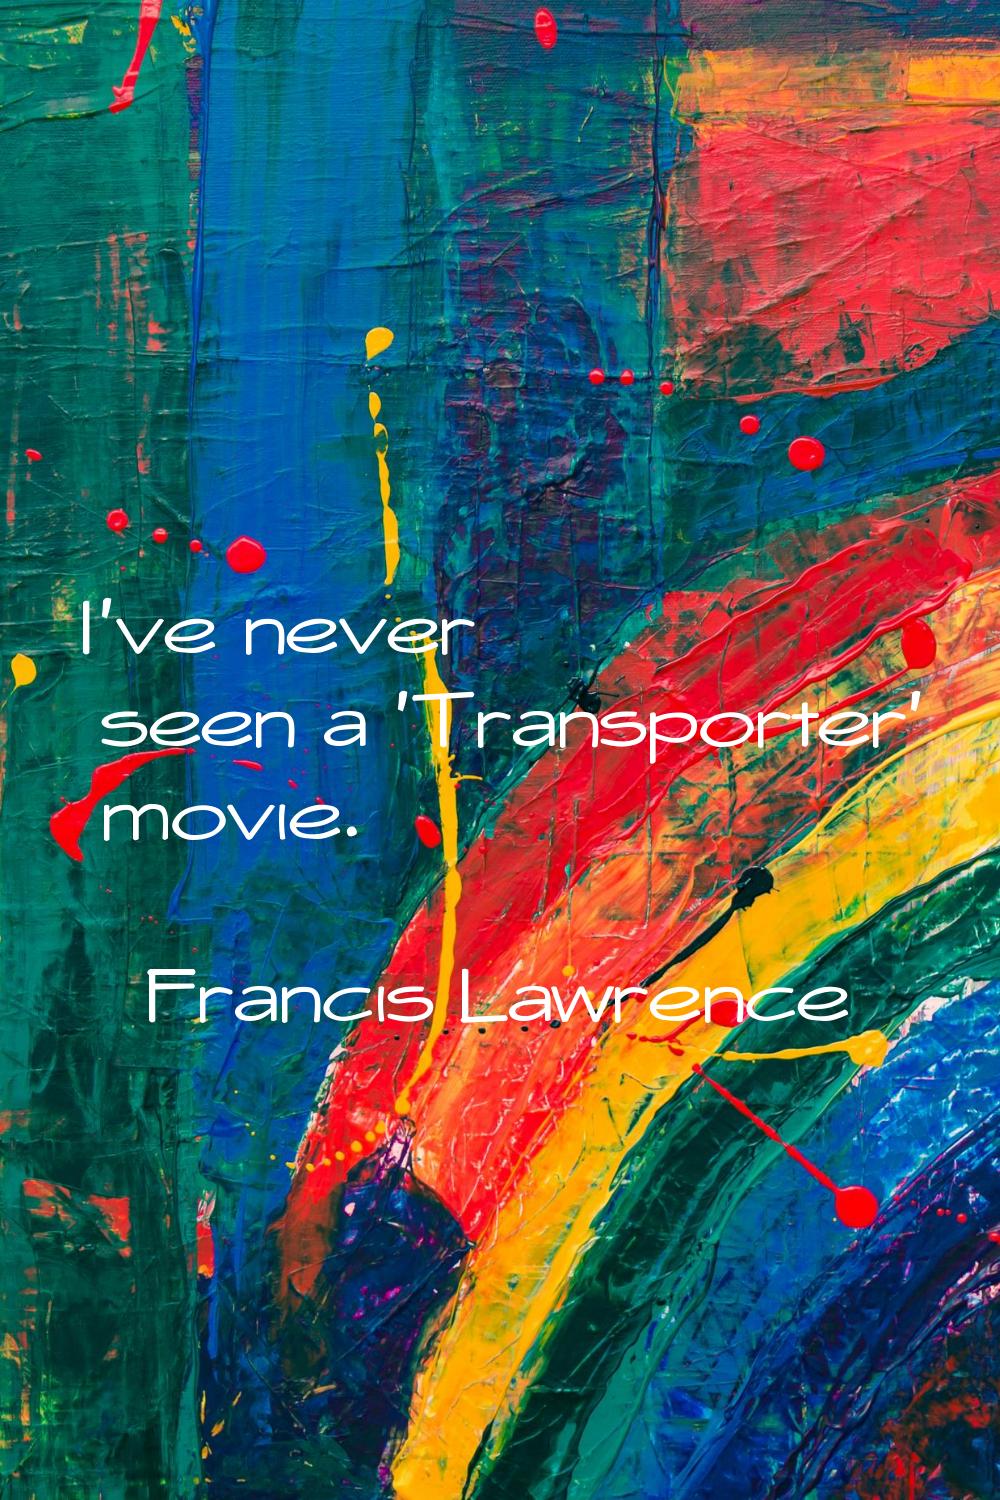 I've never seen a 'Transporter' movie.